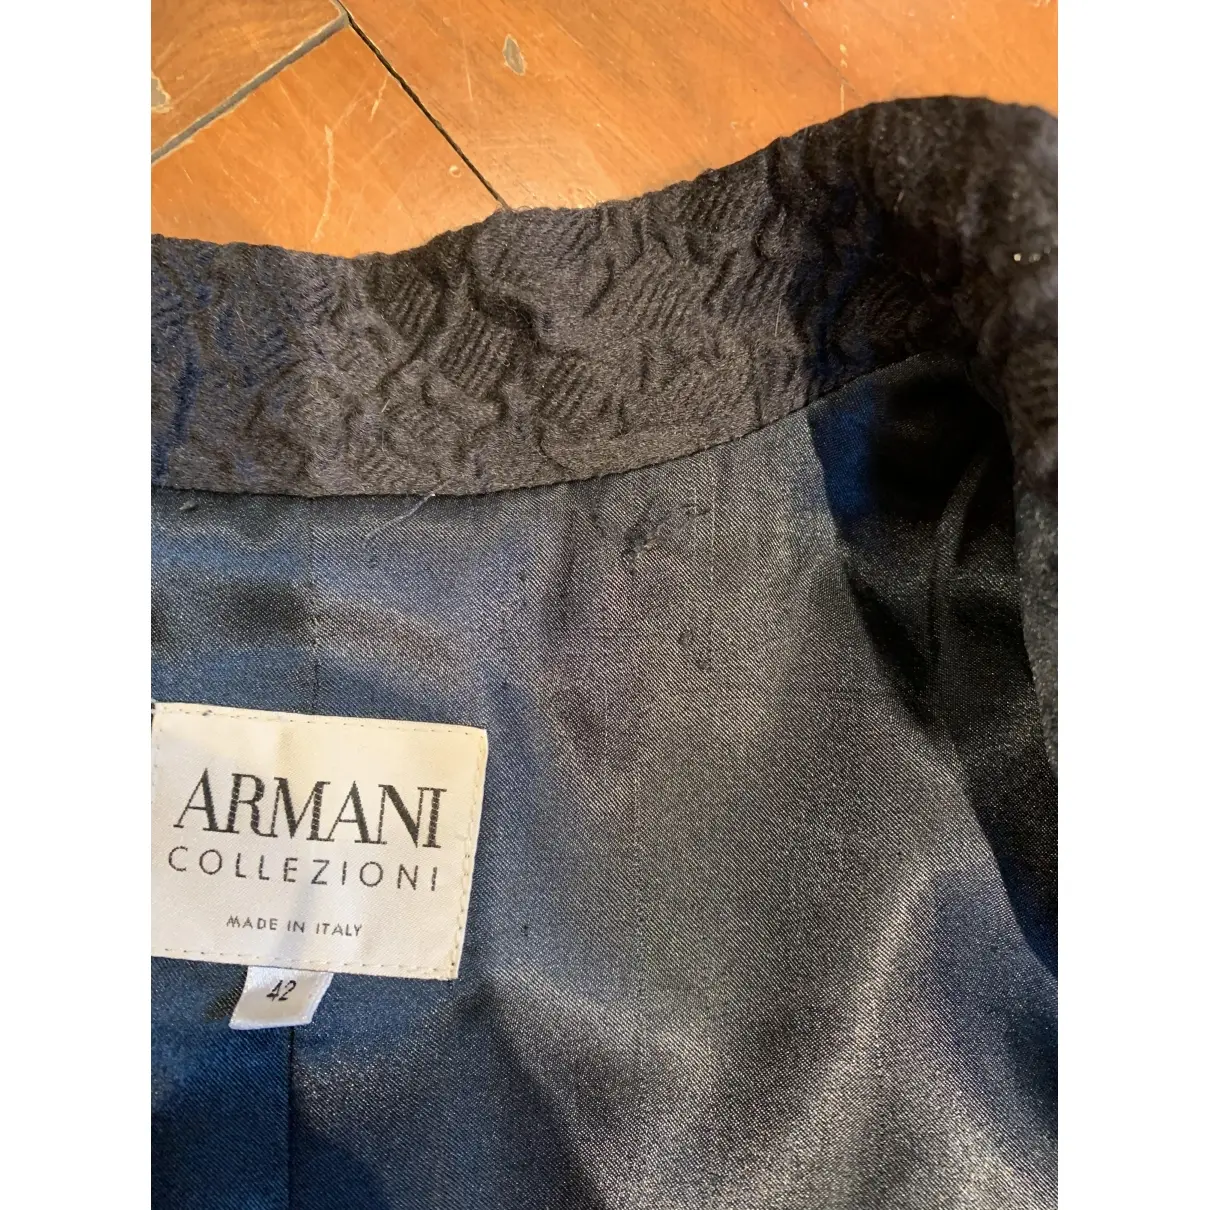 Luxury Armani Collezioni Jackets Women - Vintage